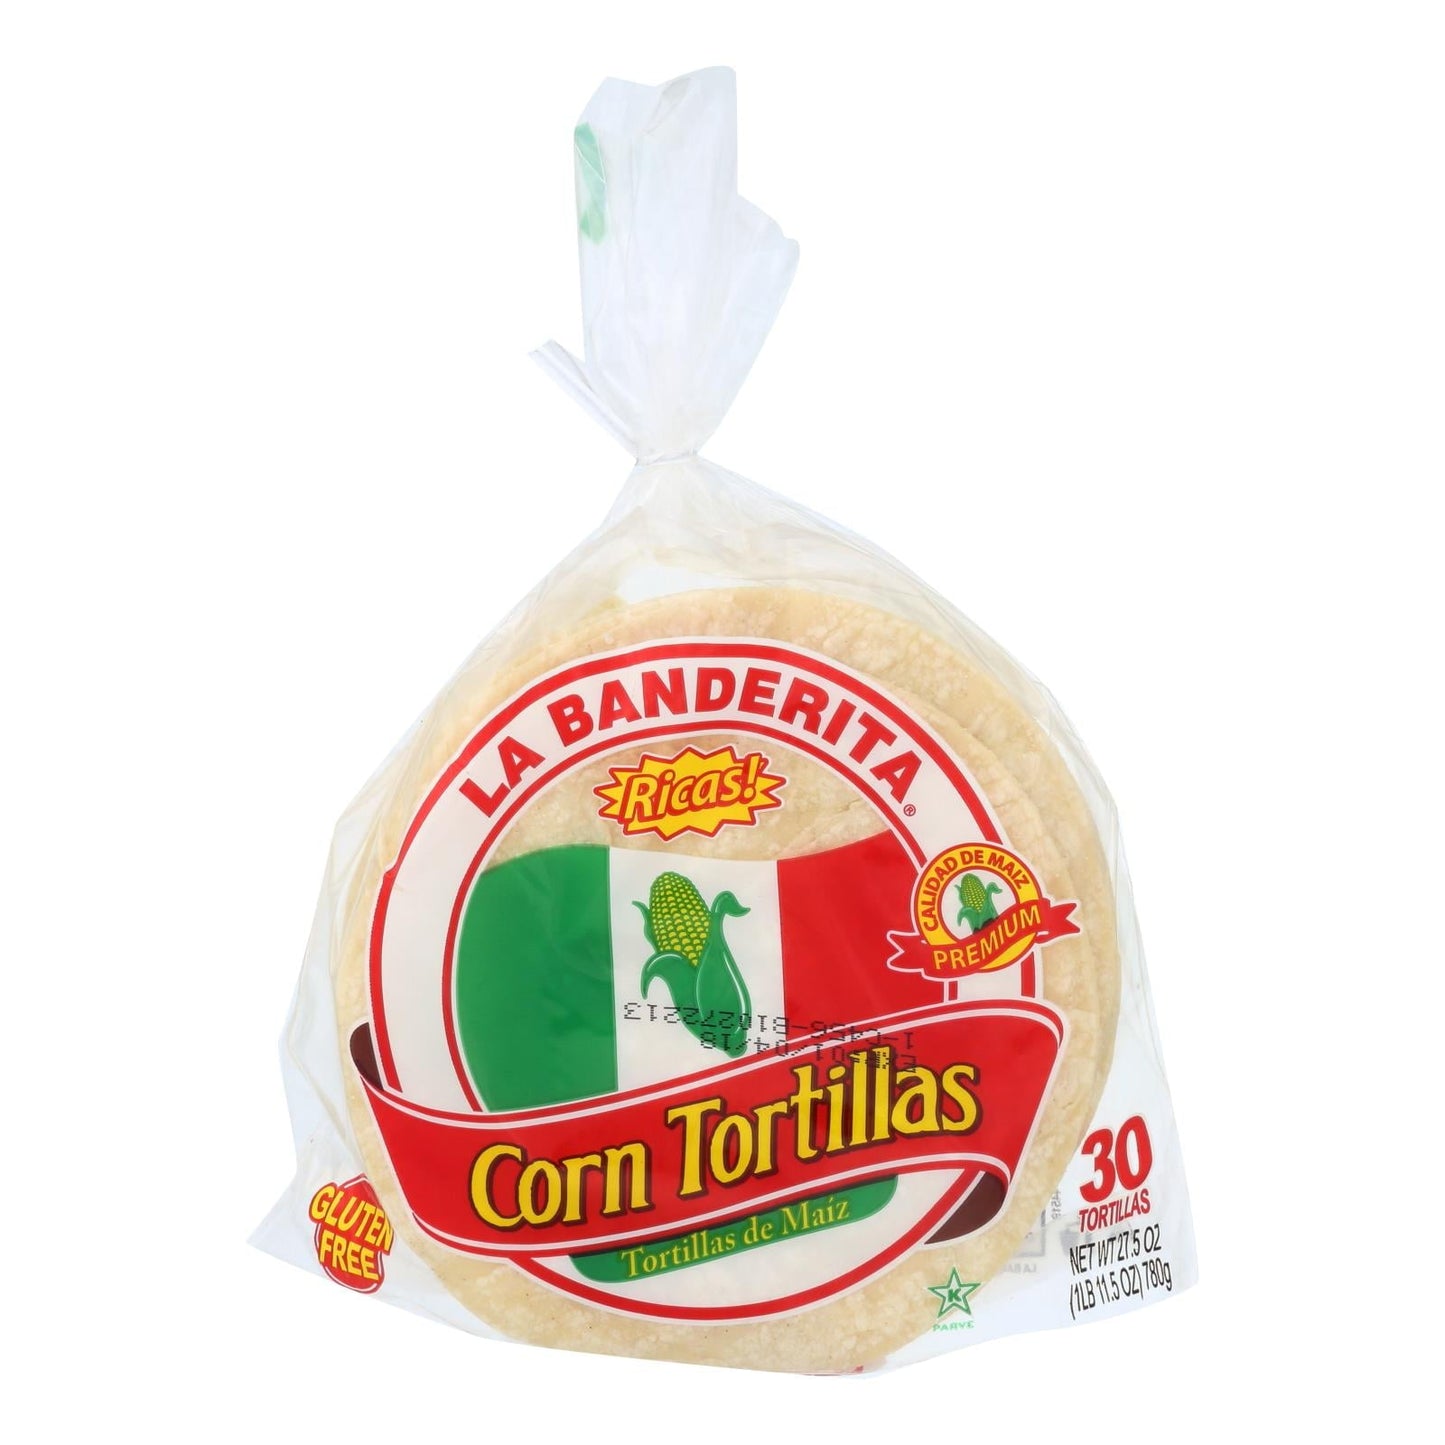 La Banderita White Corn Tortillas, 30 count, Regular Size, 24.9 oz